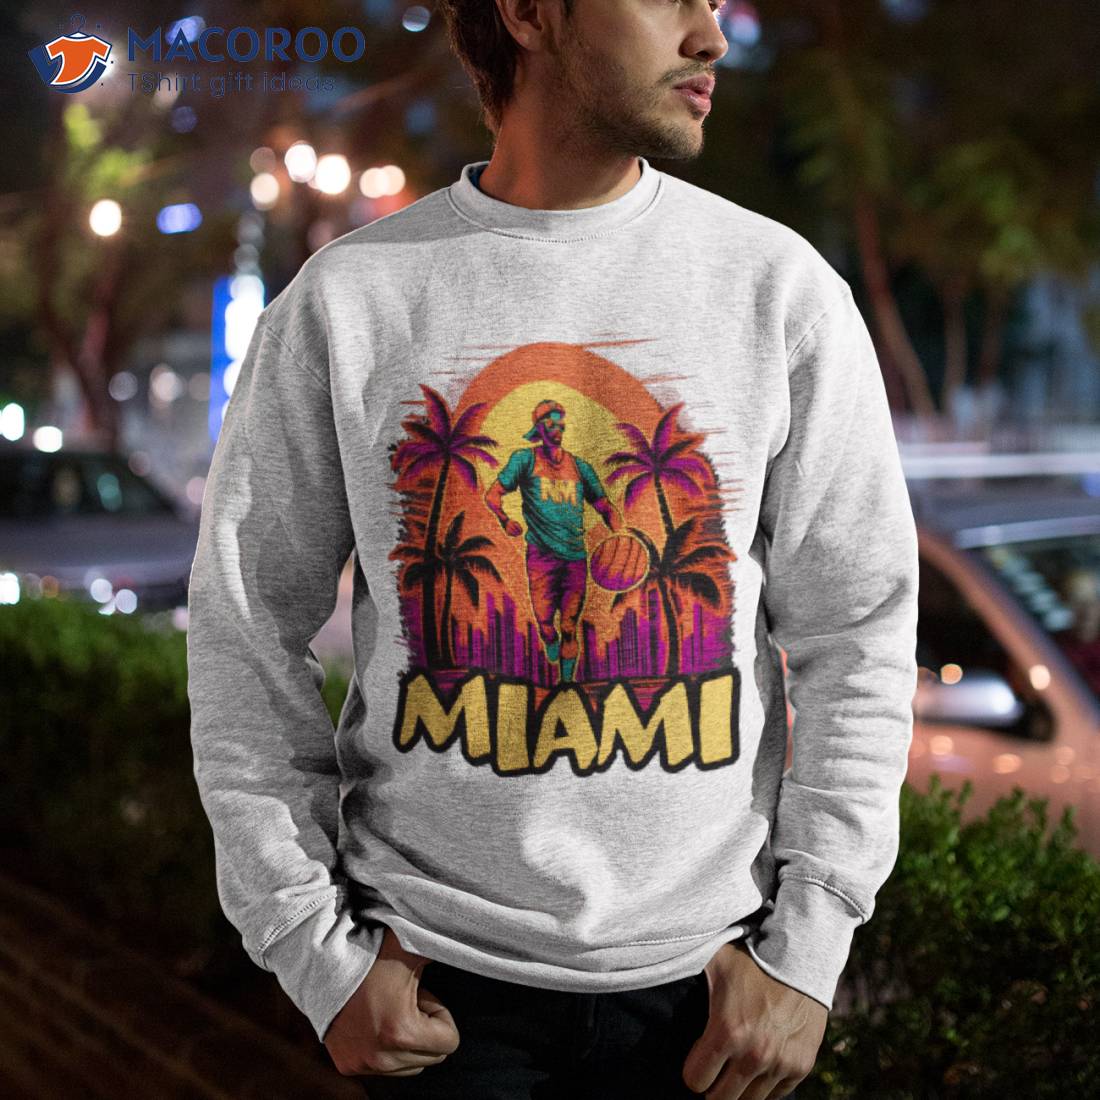 Miami Heat White Hot Vice T Shirt